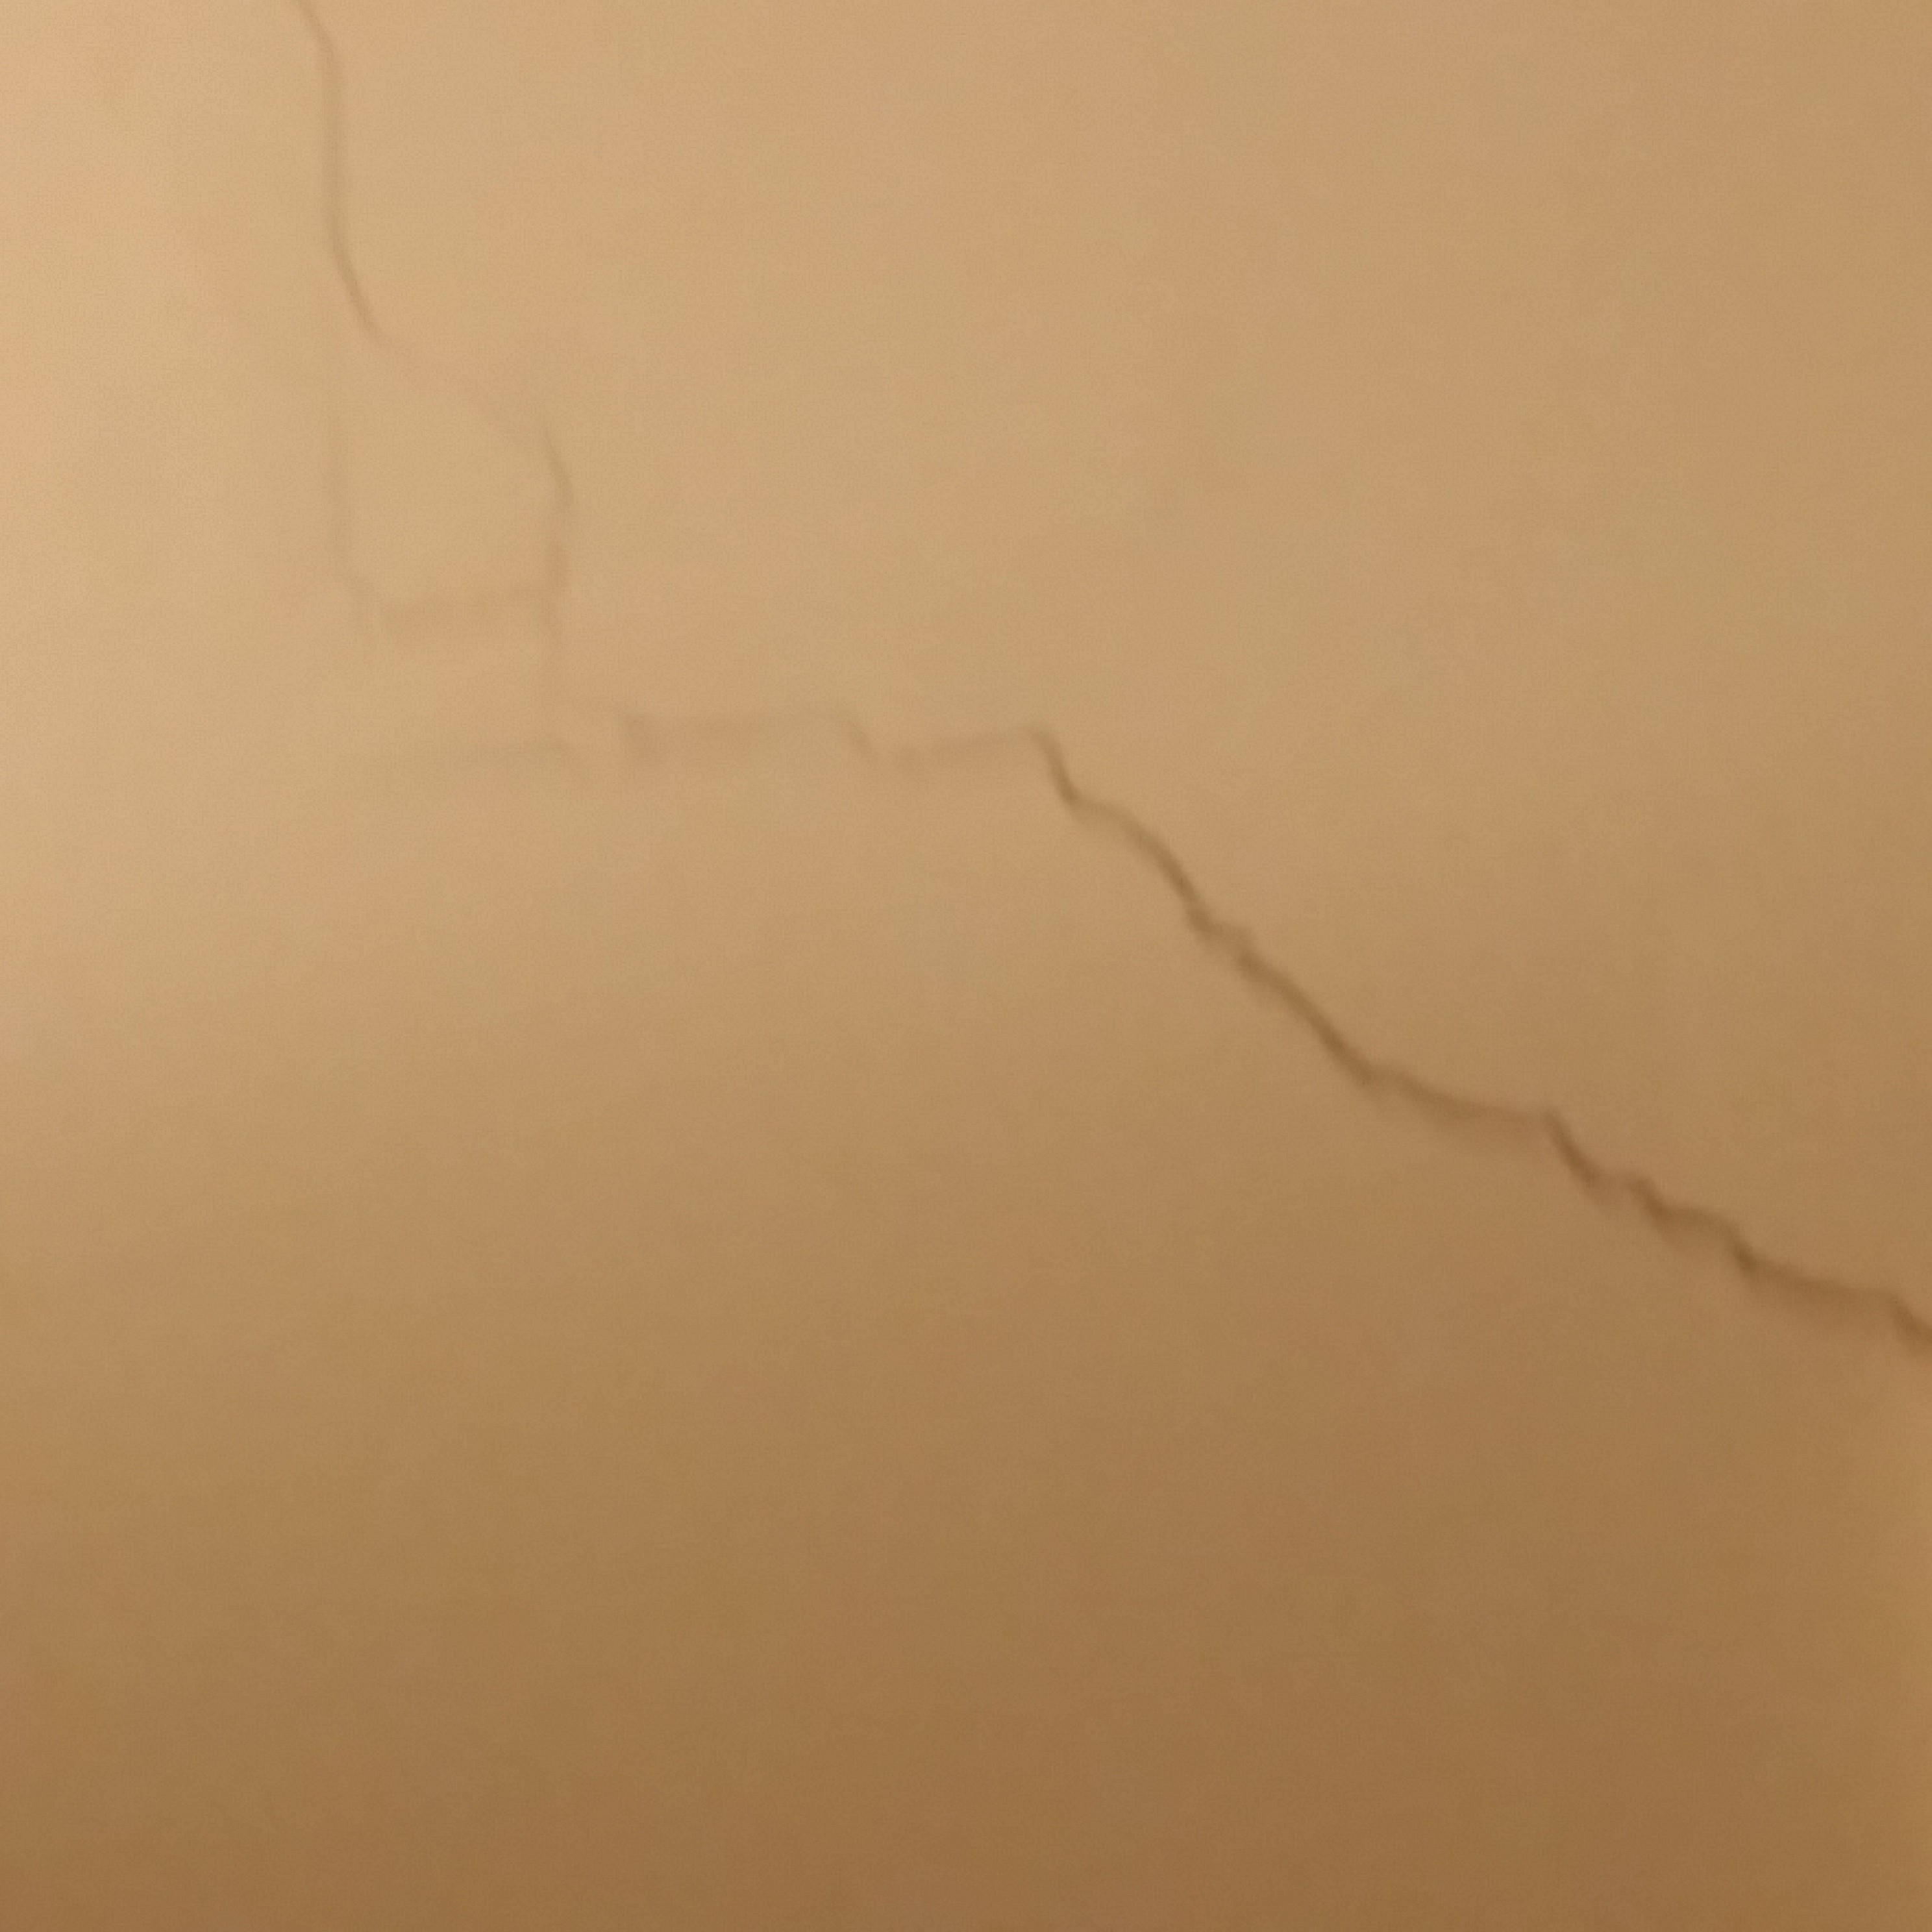 Drywall Cracks